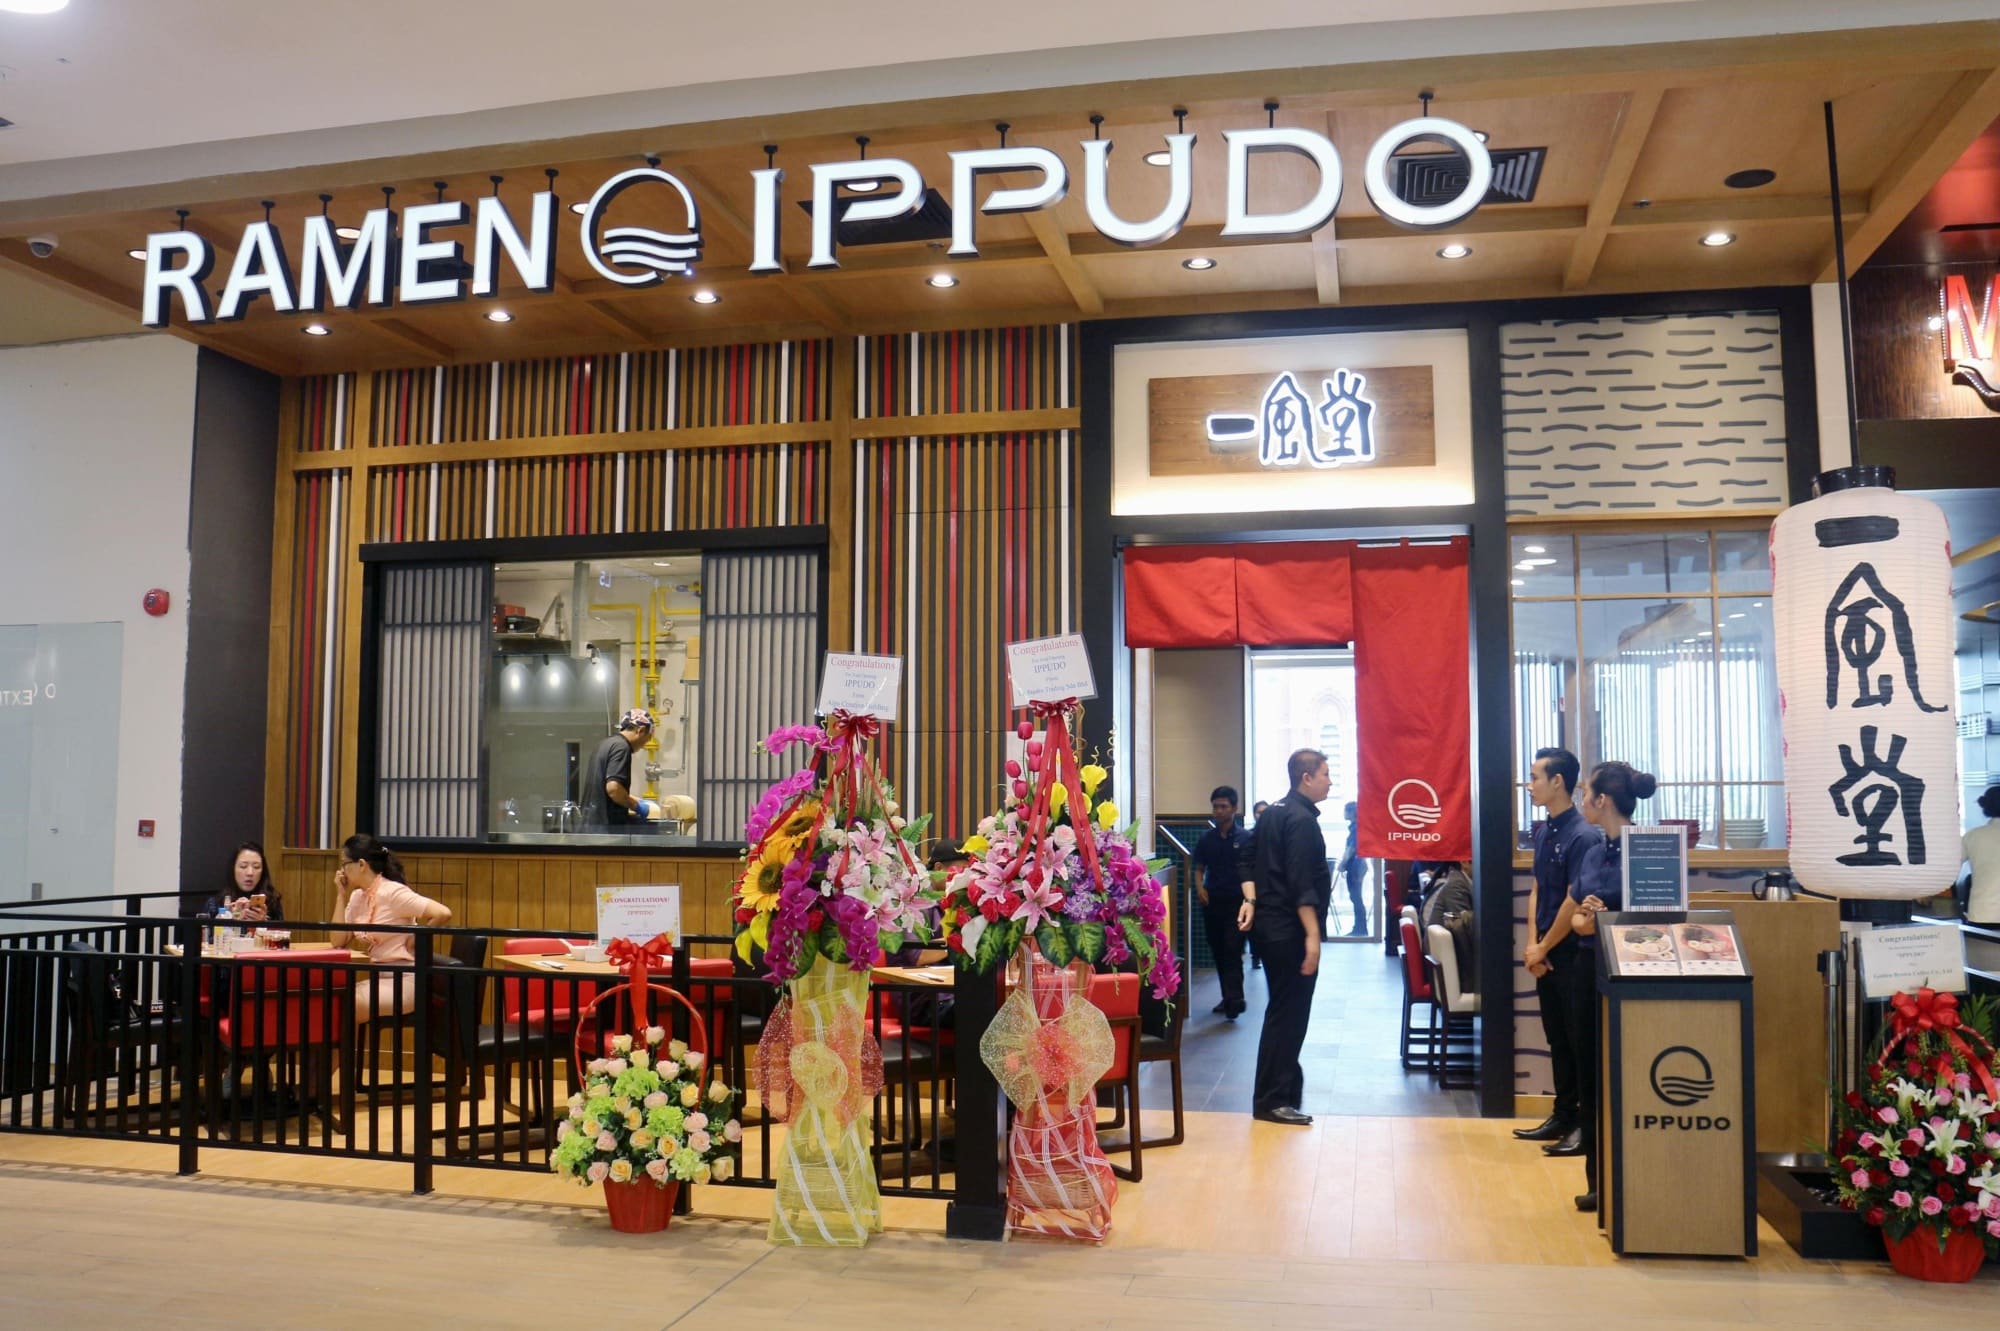 Ippudo Restaurant